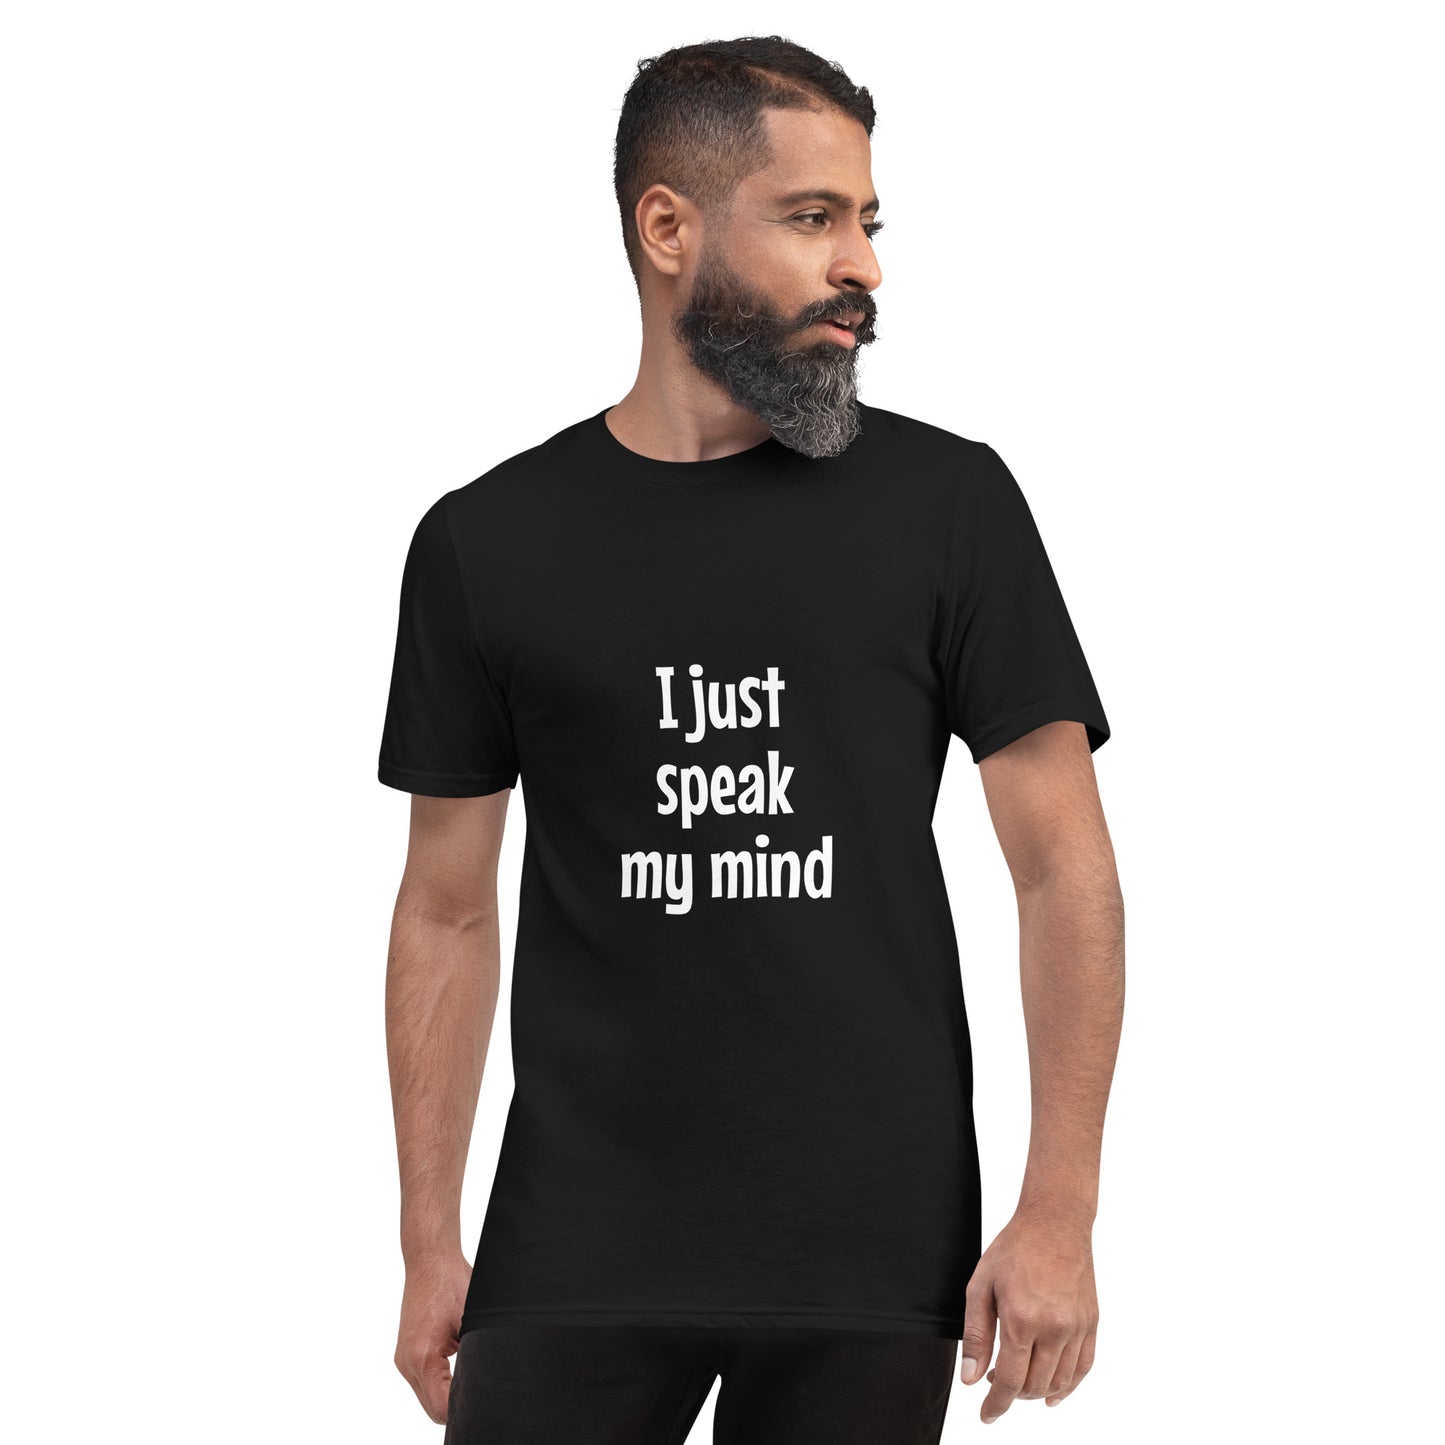 I just speak my mind - Men's T-Shirt